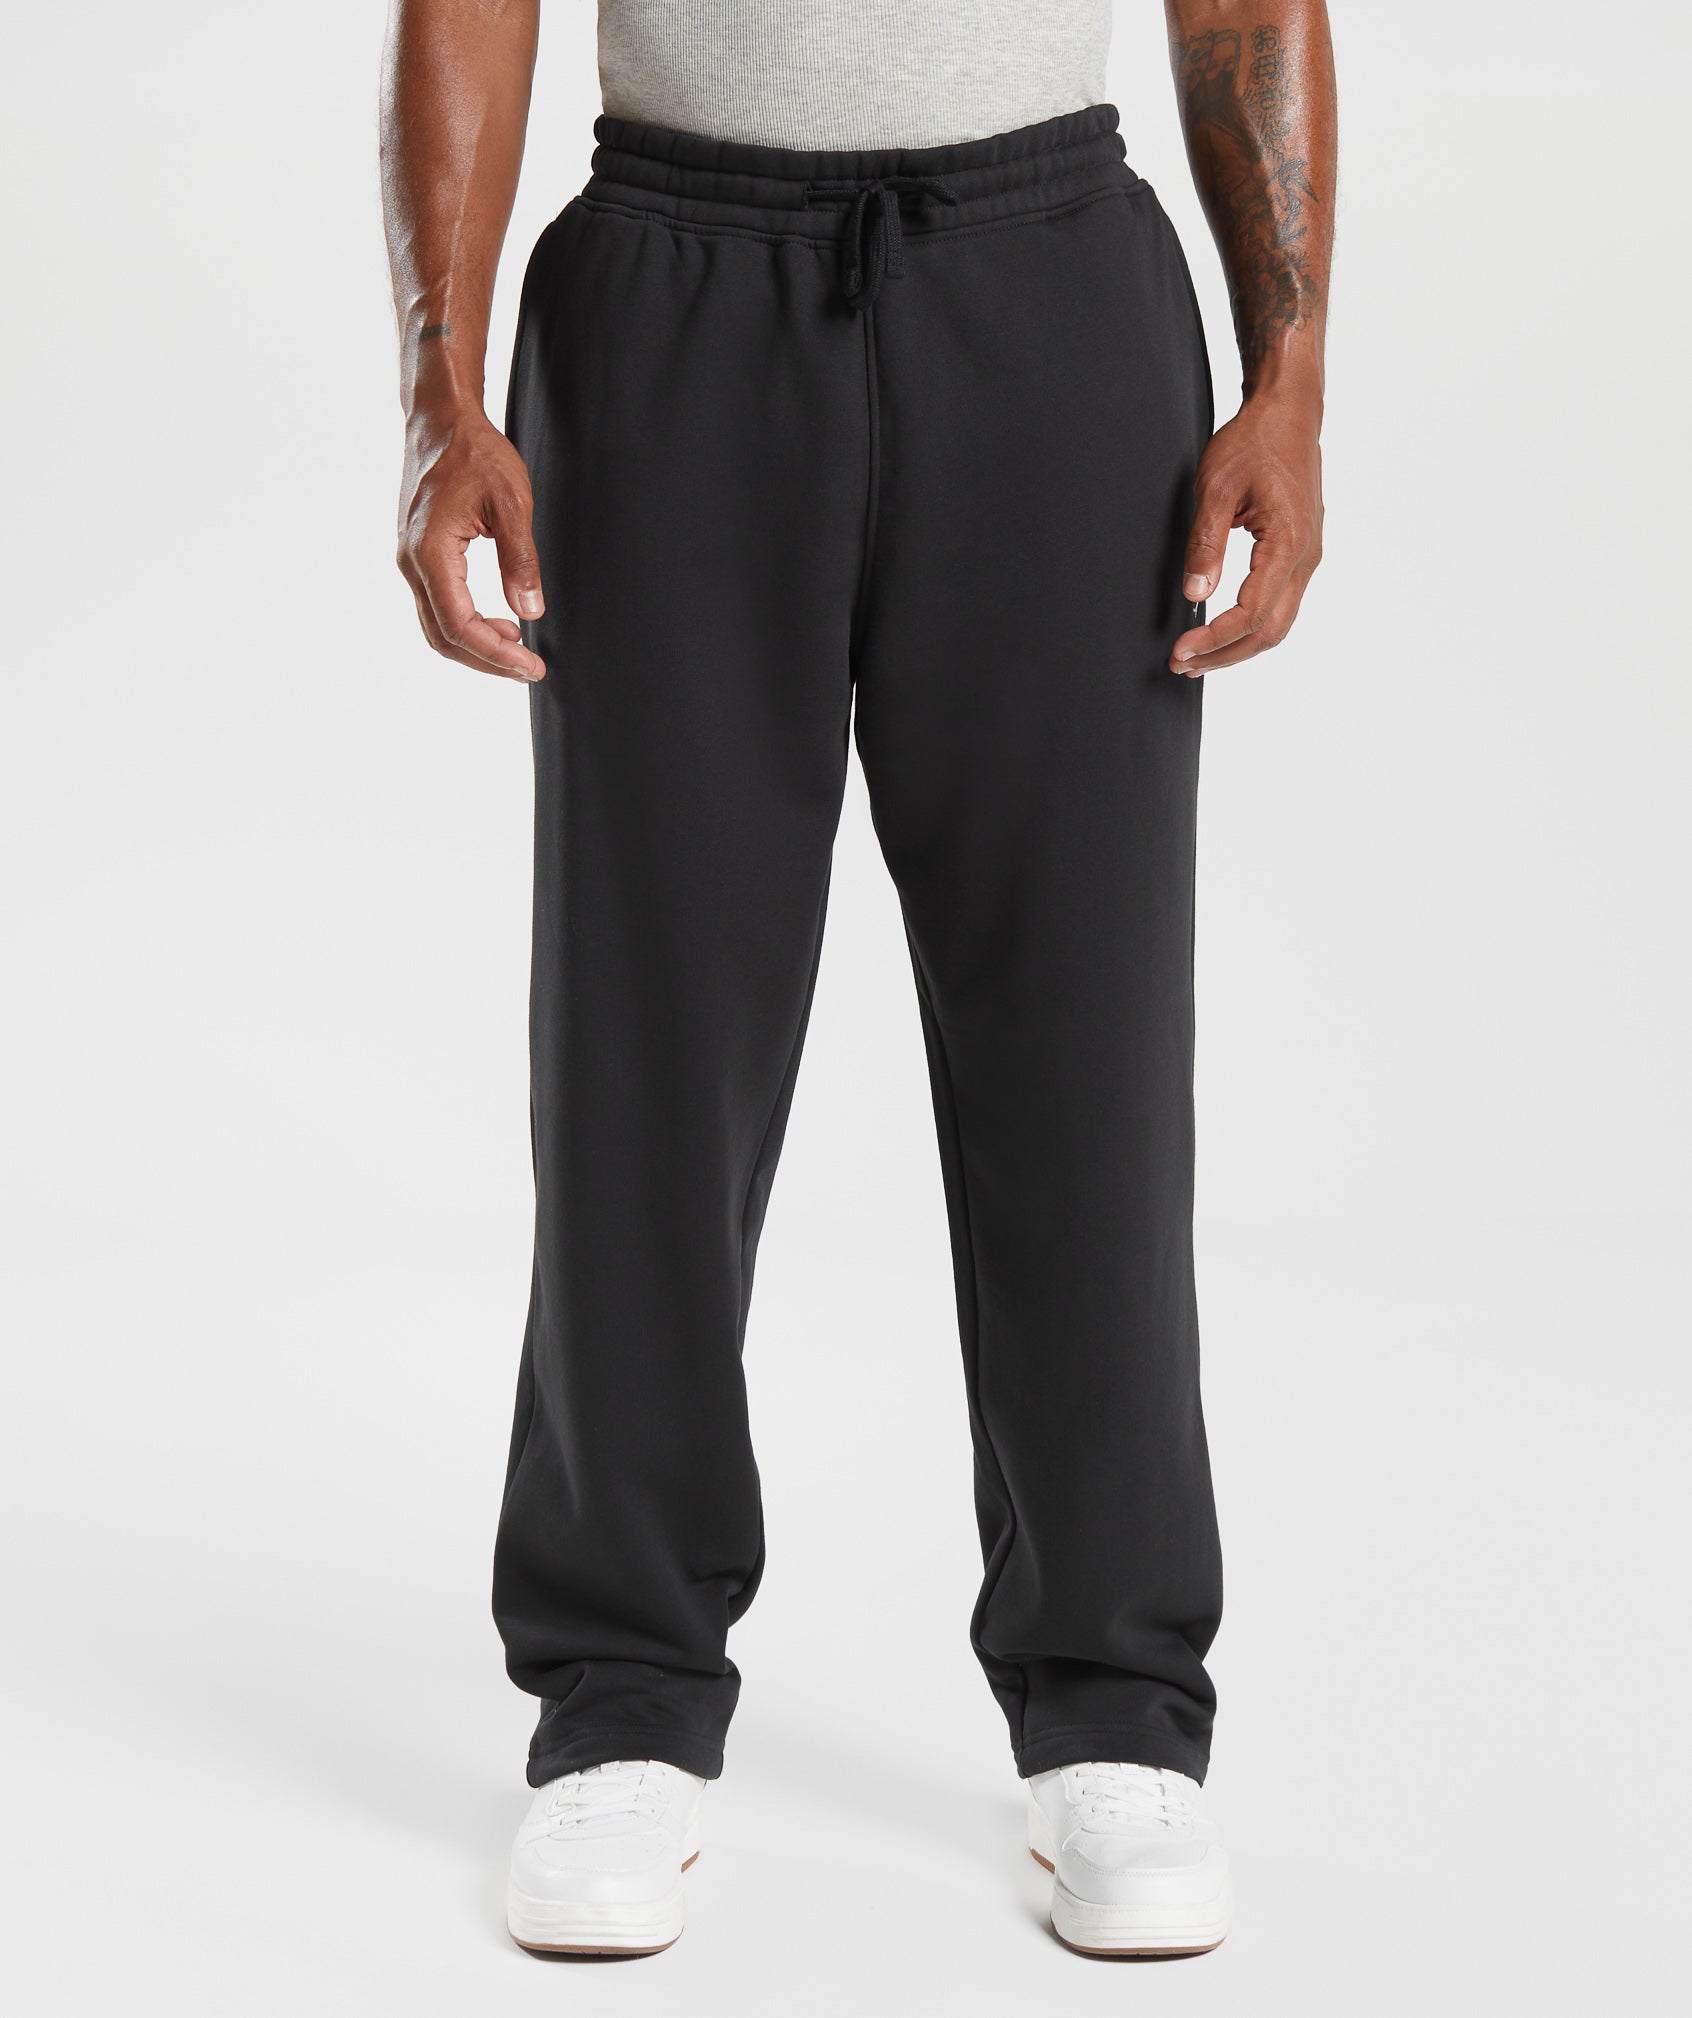 Black Squad Sweatpants Mens 2XL XXL Tapered Jogger Pants Stretch N154